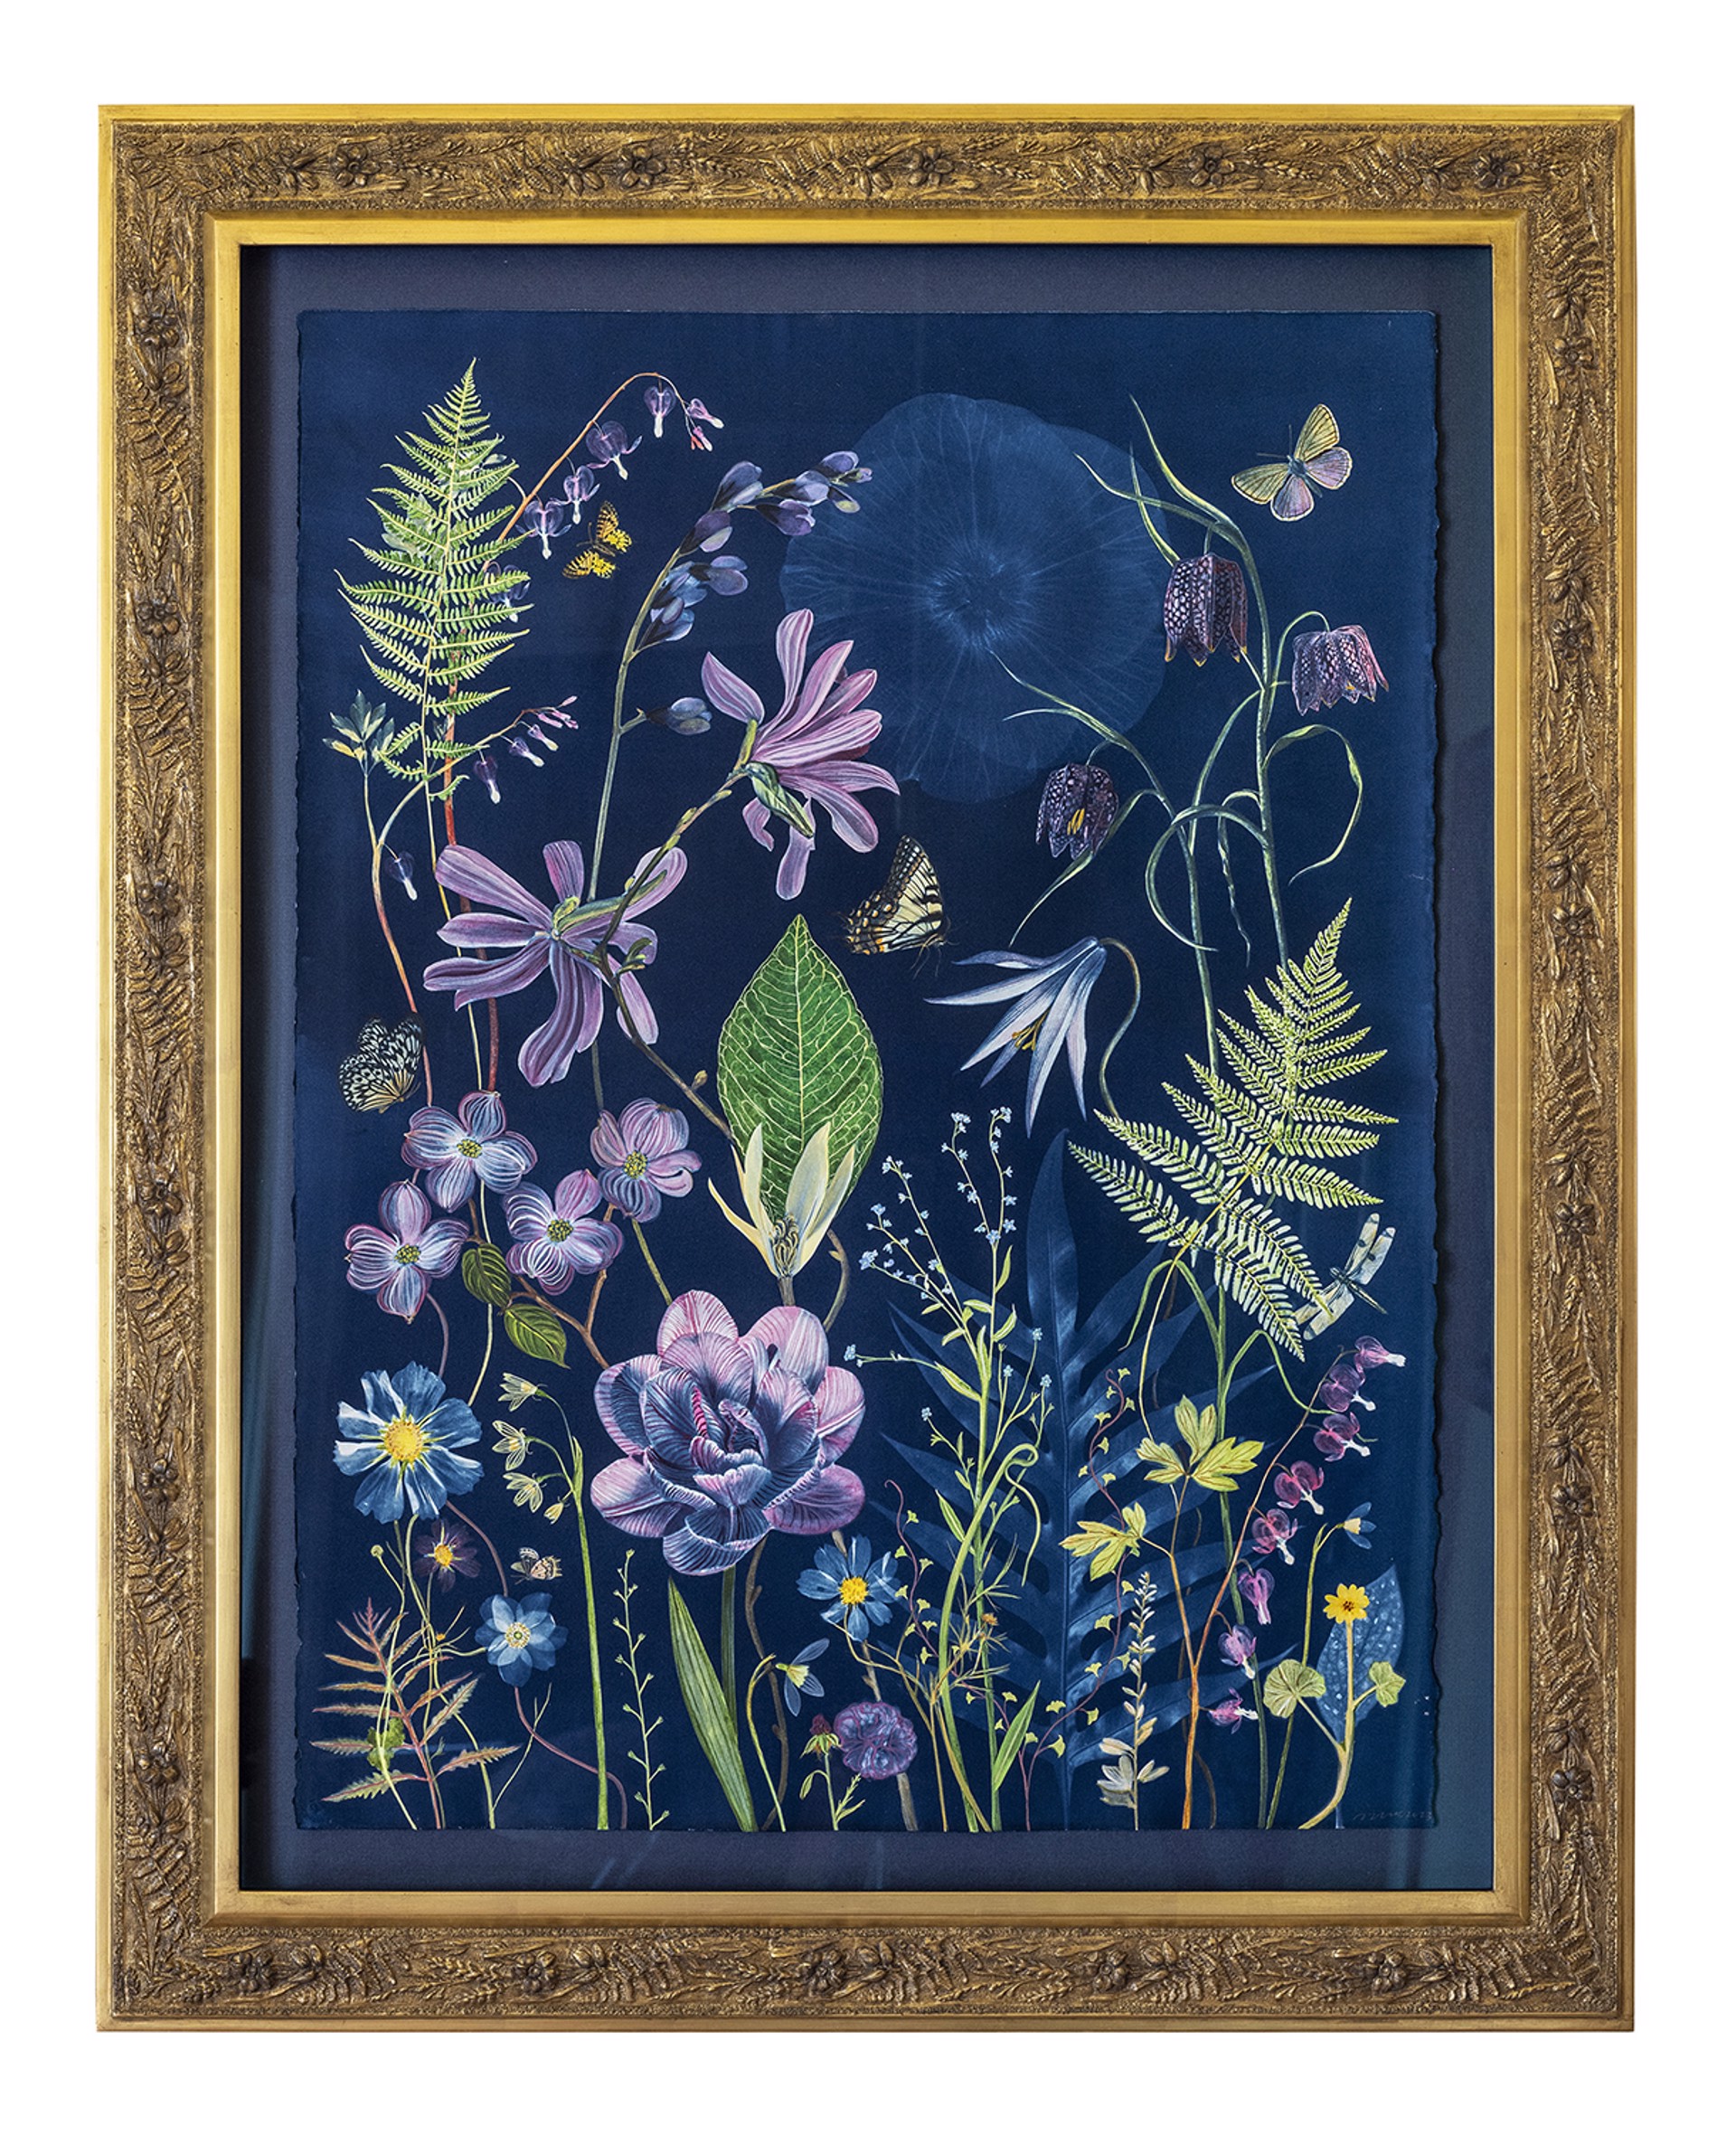 Picturesque Botany (Magnolia, Dogwood, Tulip, Ferns, Bleeding Heart, Lily, Pollinators, etc.) by Julia Whitney Barnes